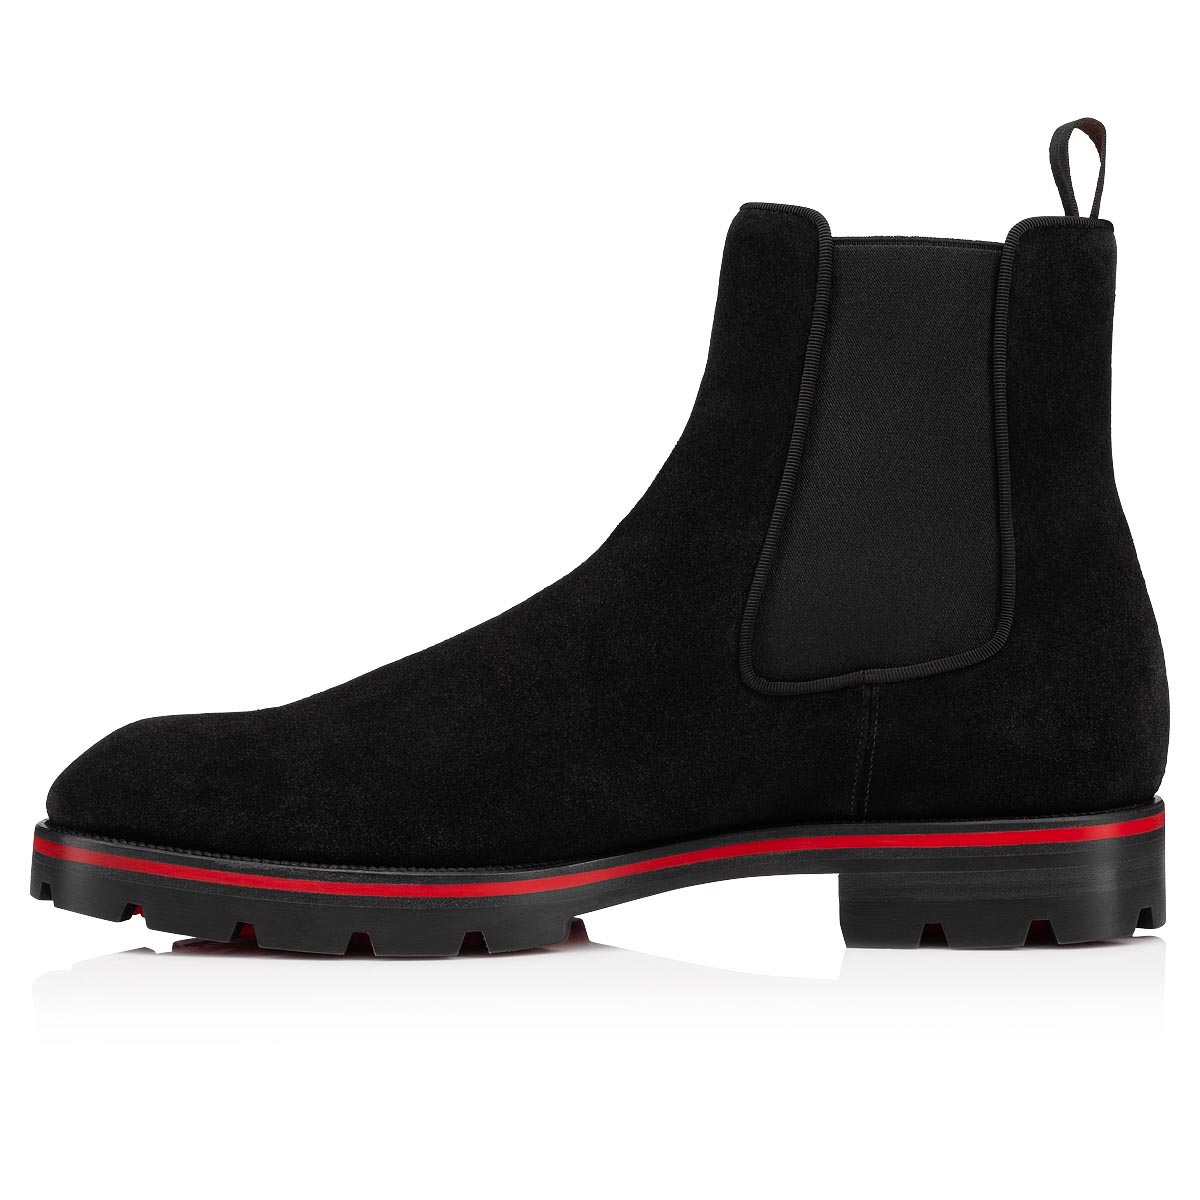 Alpinono - Ankle boots - Calf leather - Black - Christian Louboutin